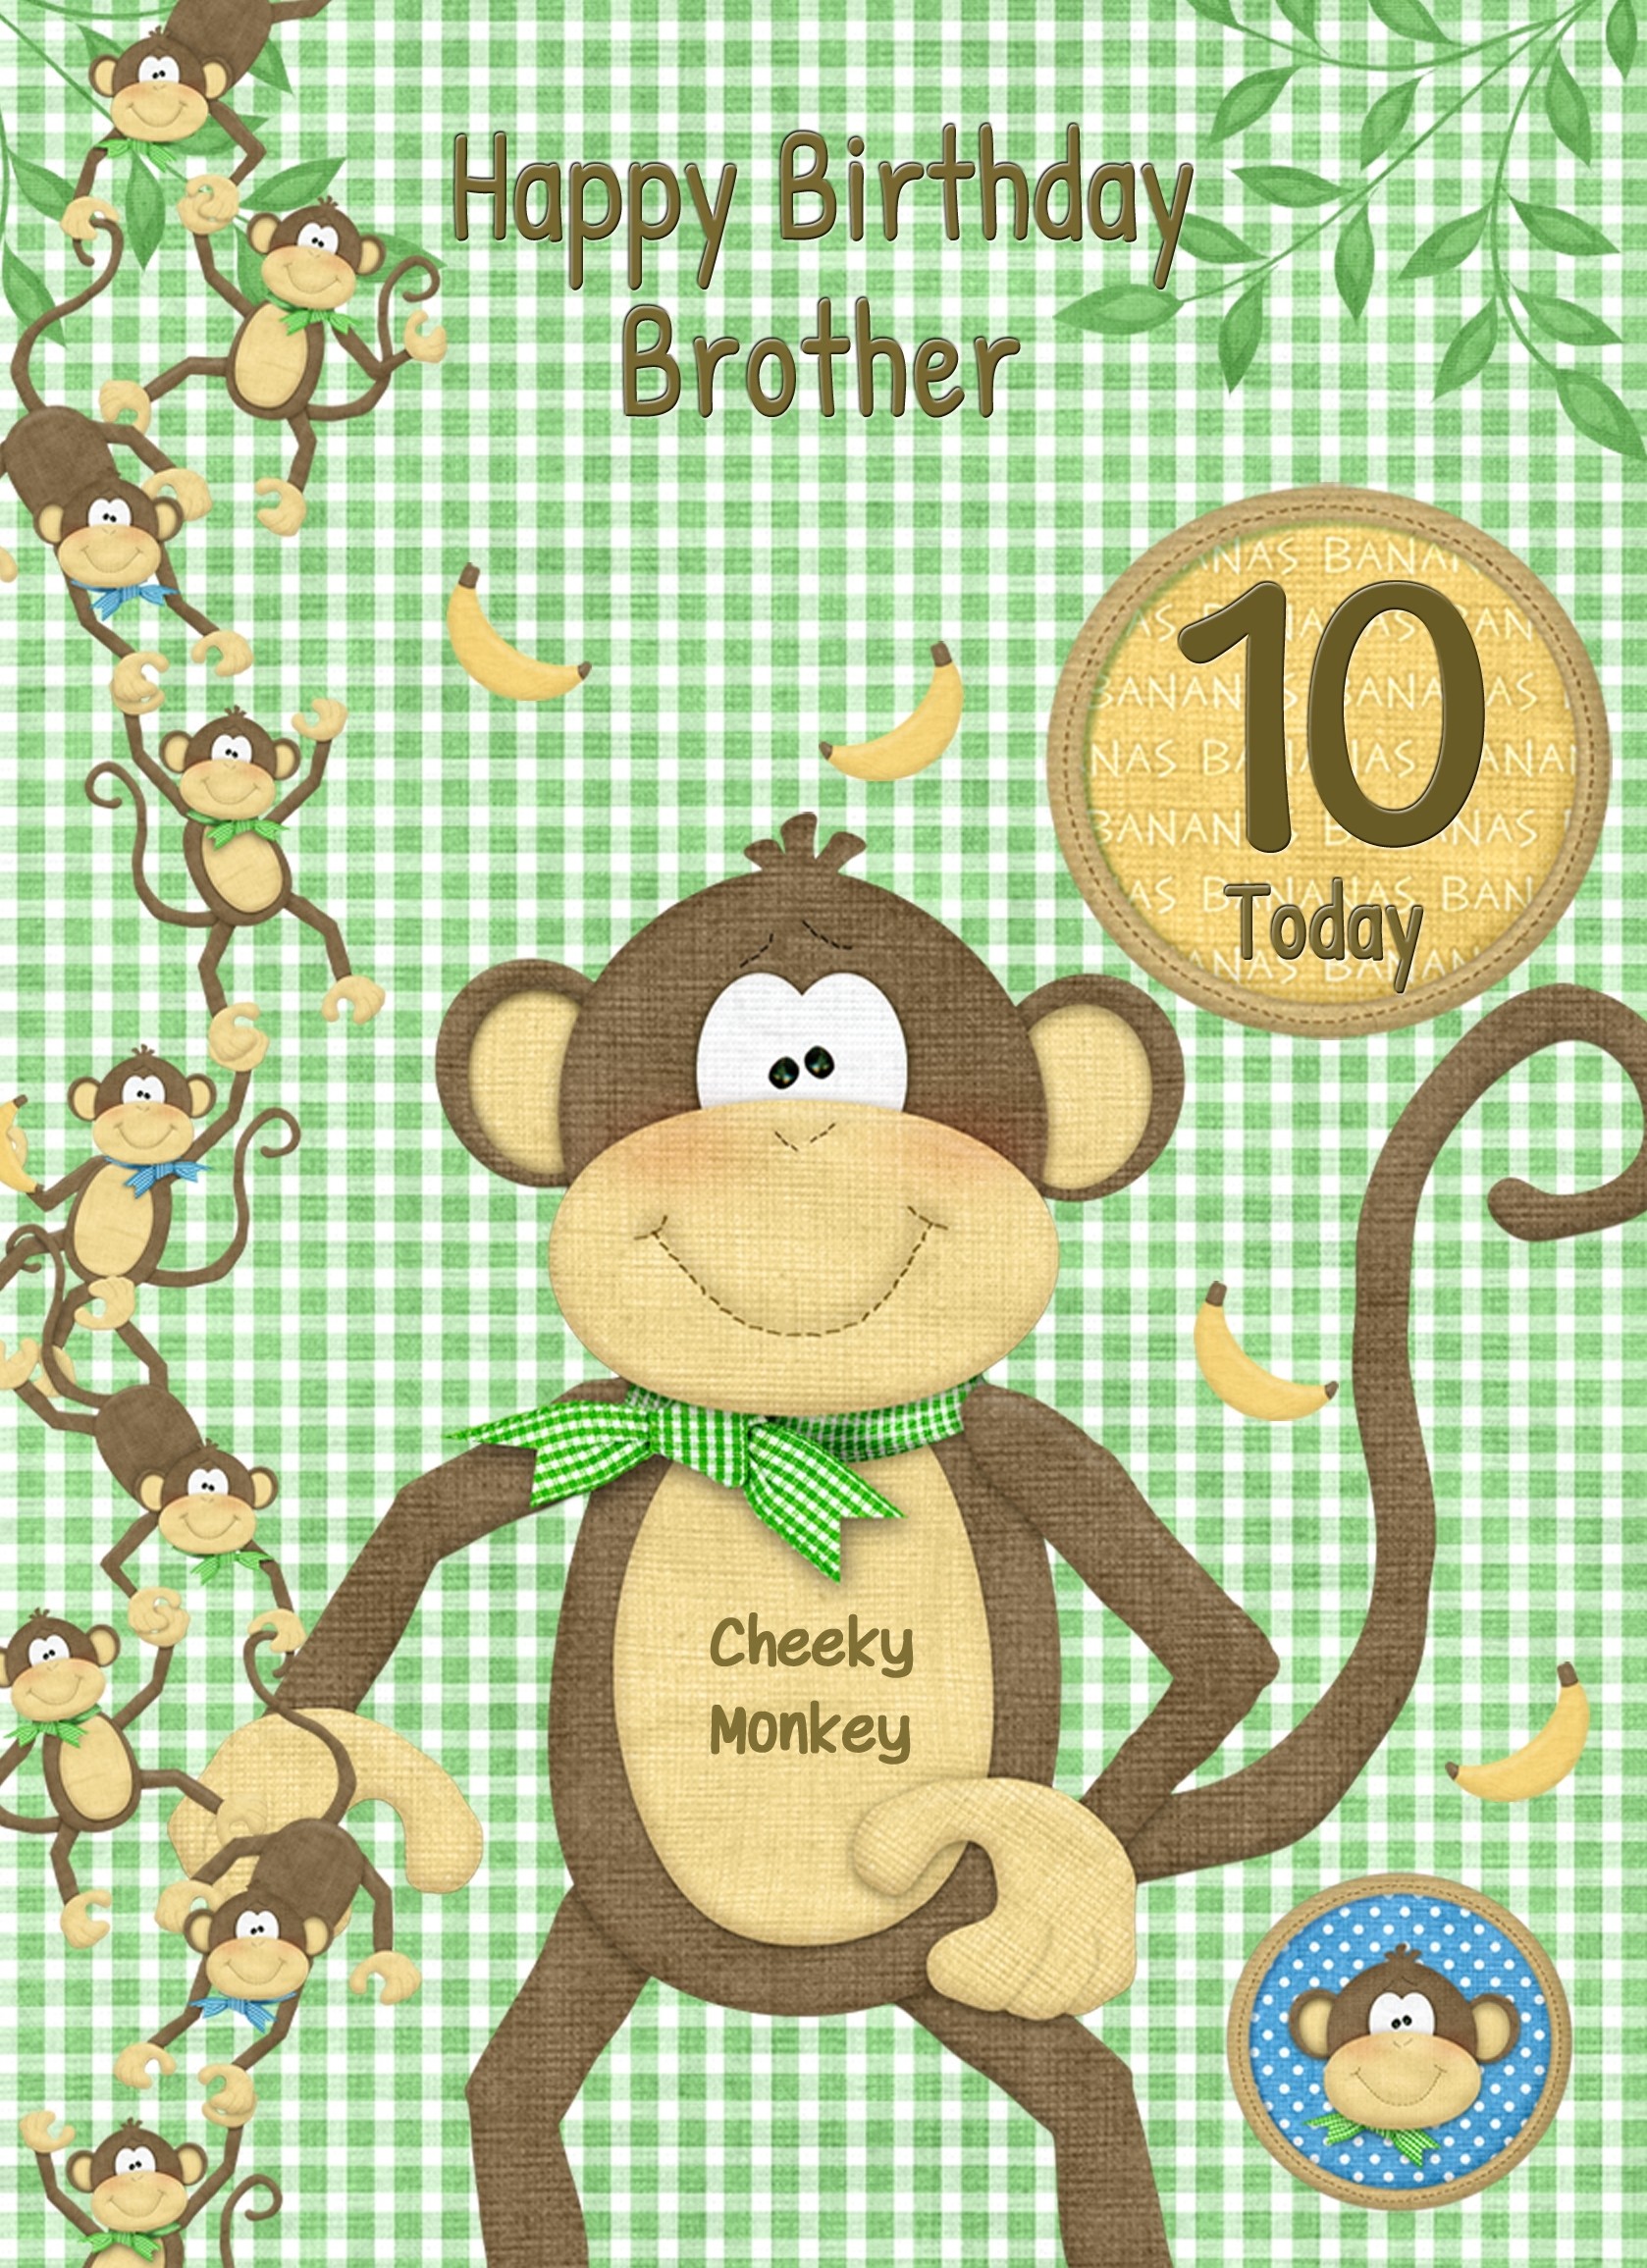 Kids 10th Birthday Cheeky Monkey Cartoon Card for Brother